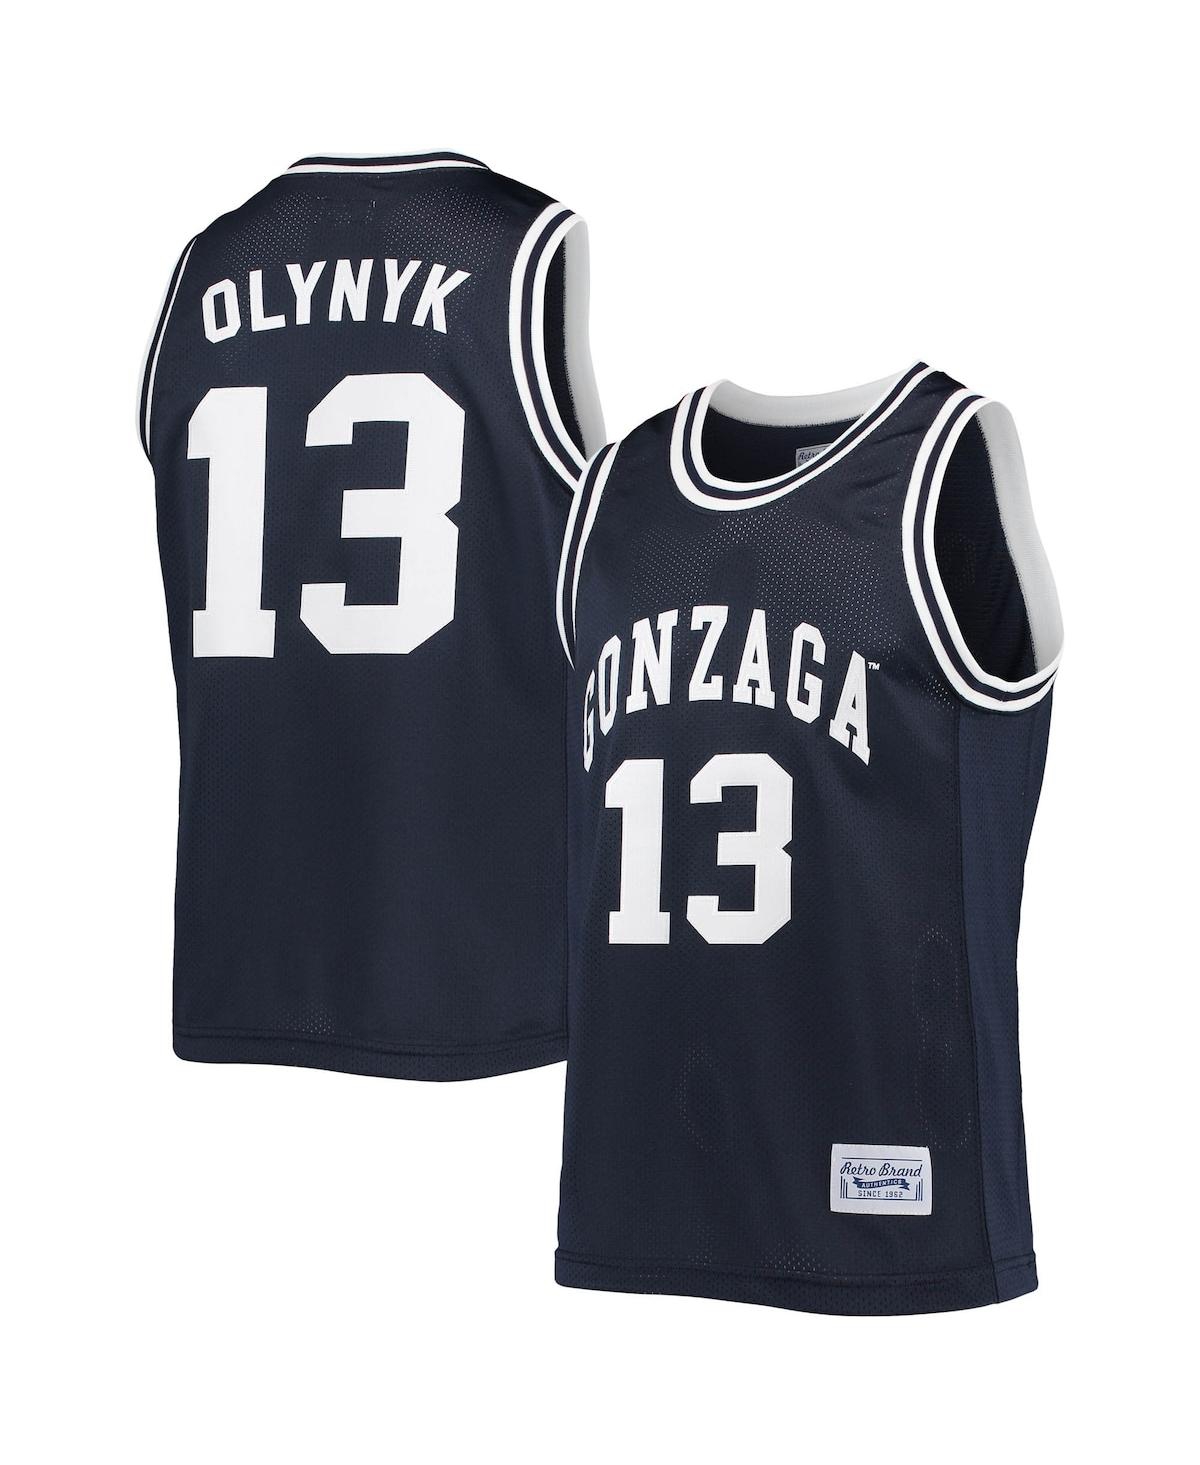 Men's Original Retro Brand Kelly Olynyk Navy Gonzaga Bulldogs Alumni Commemorative Classic Basketball Jersey - Navy